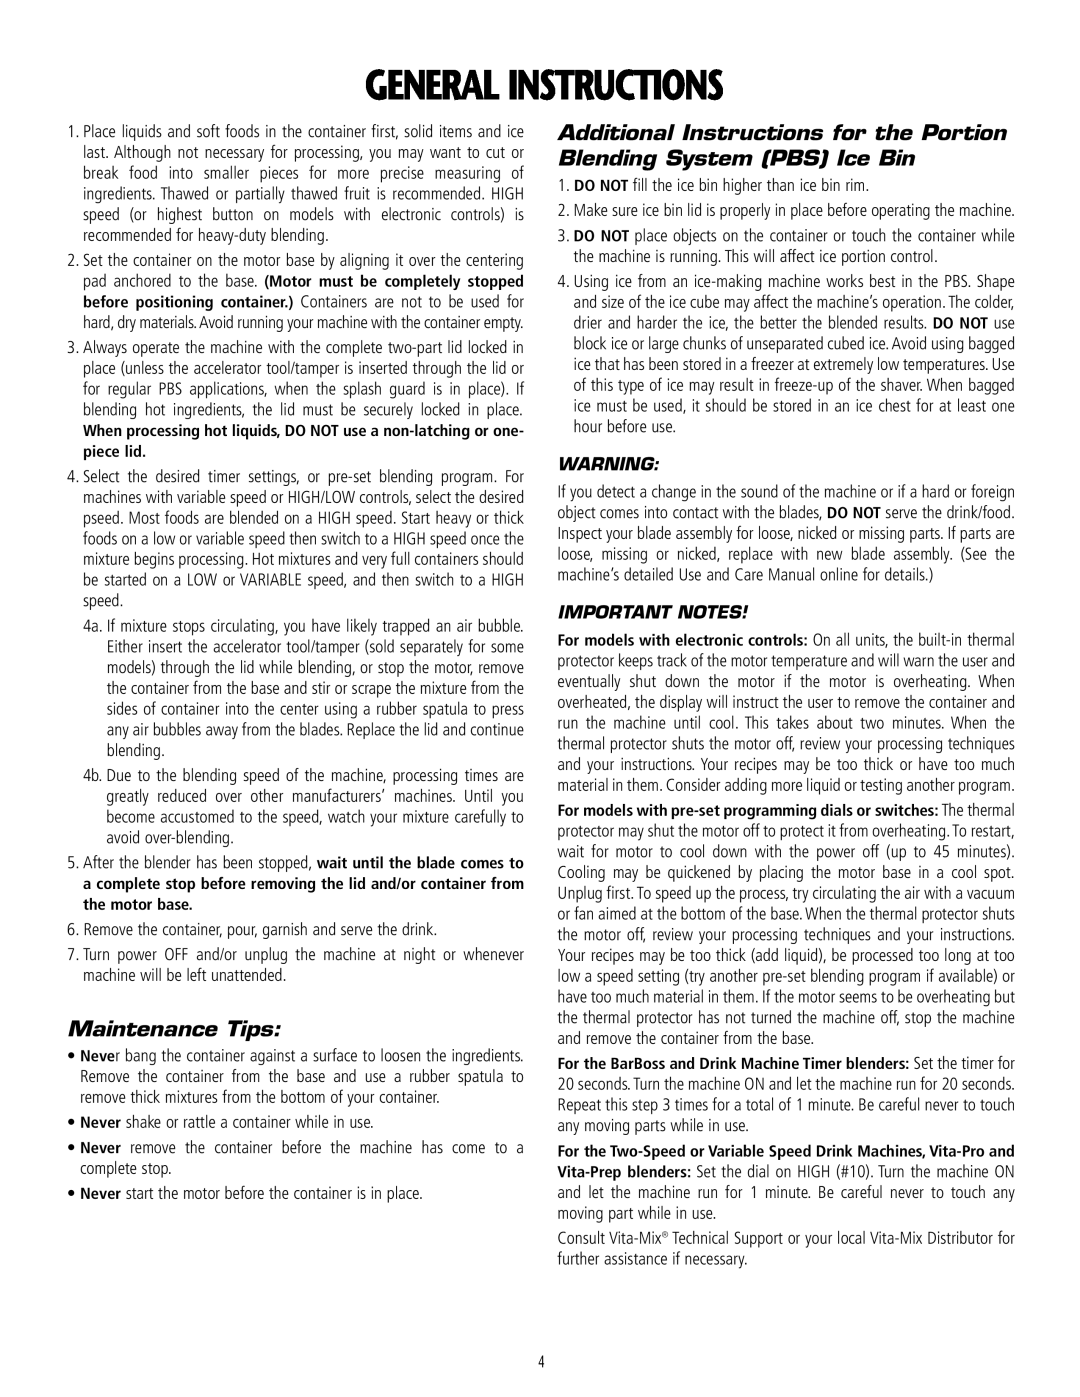 Vita-Mix 101807 manual General Instructions, Maintenance Tips, Important Notes 